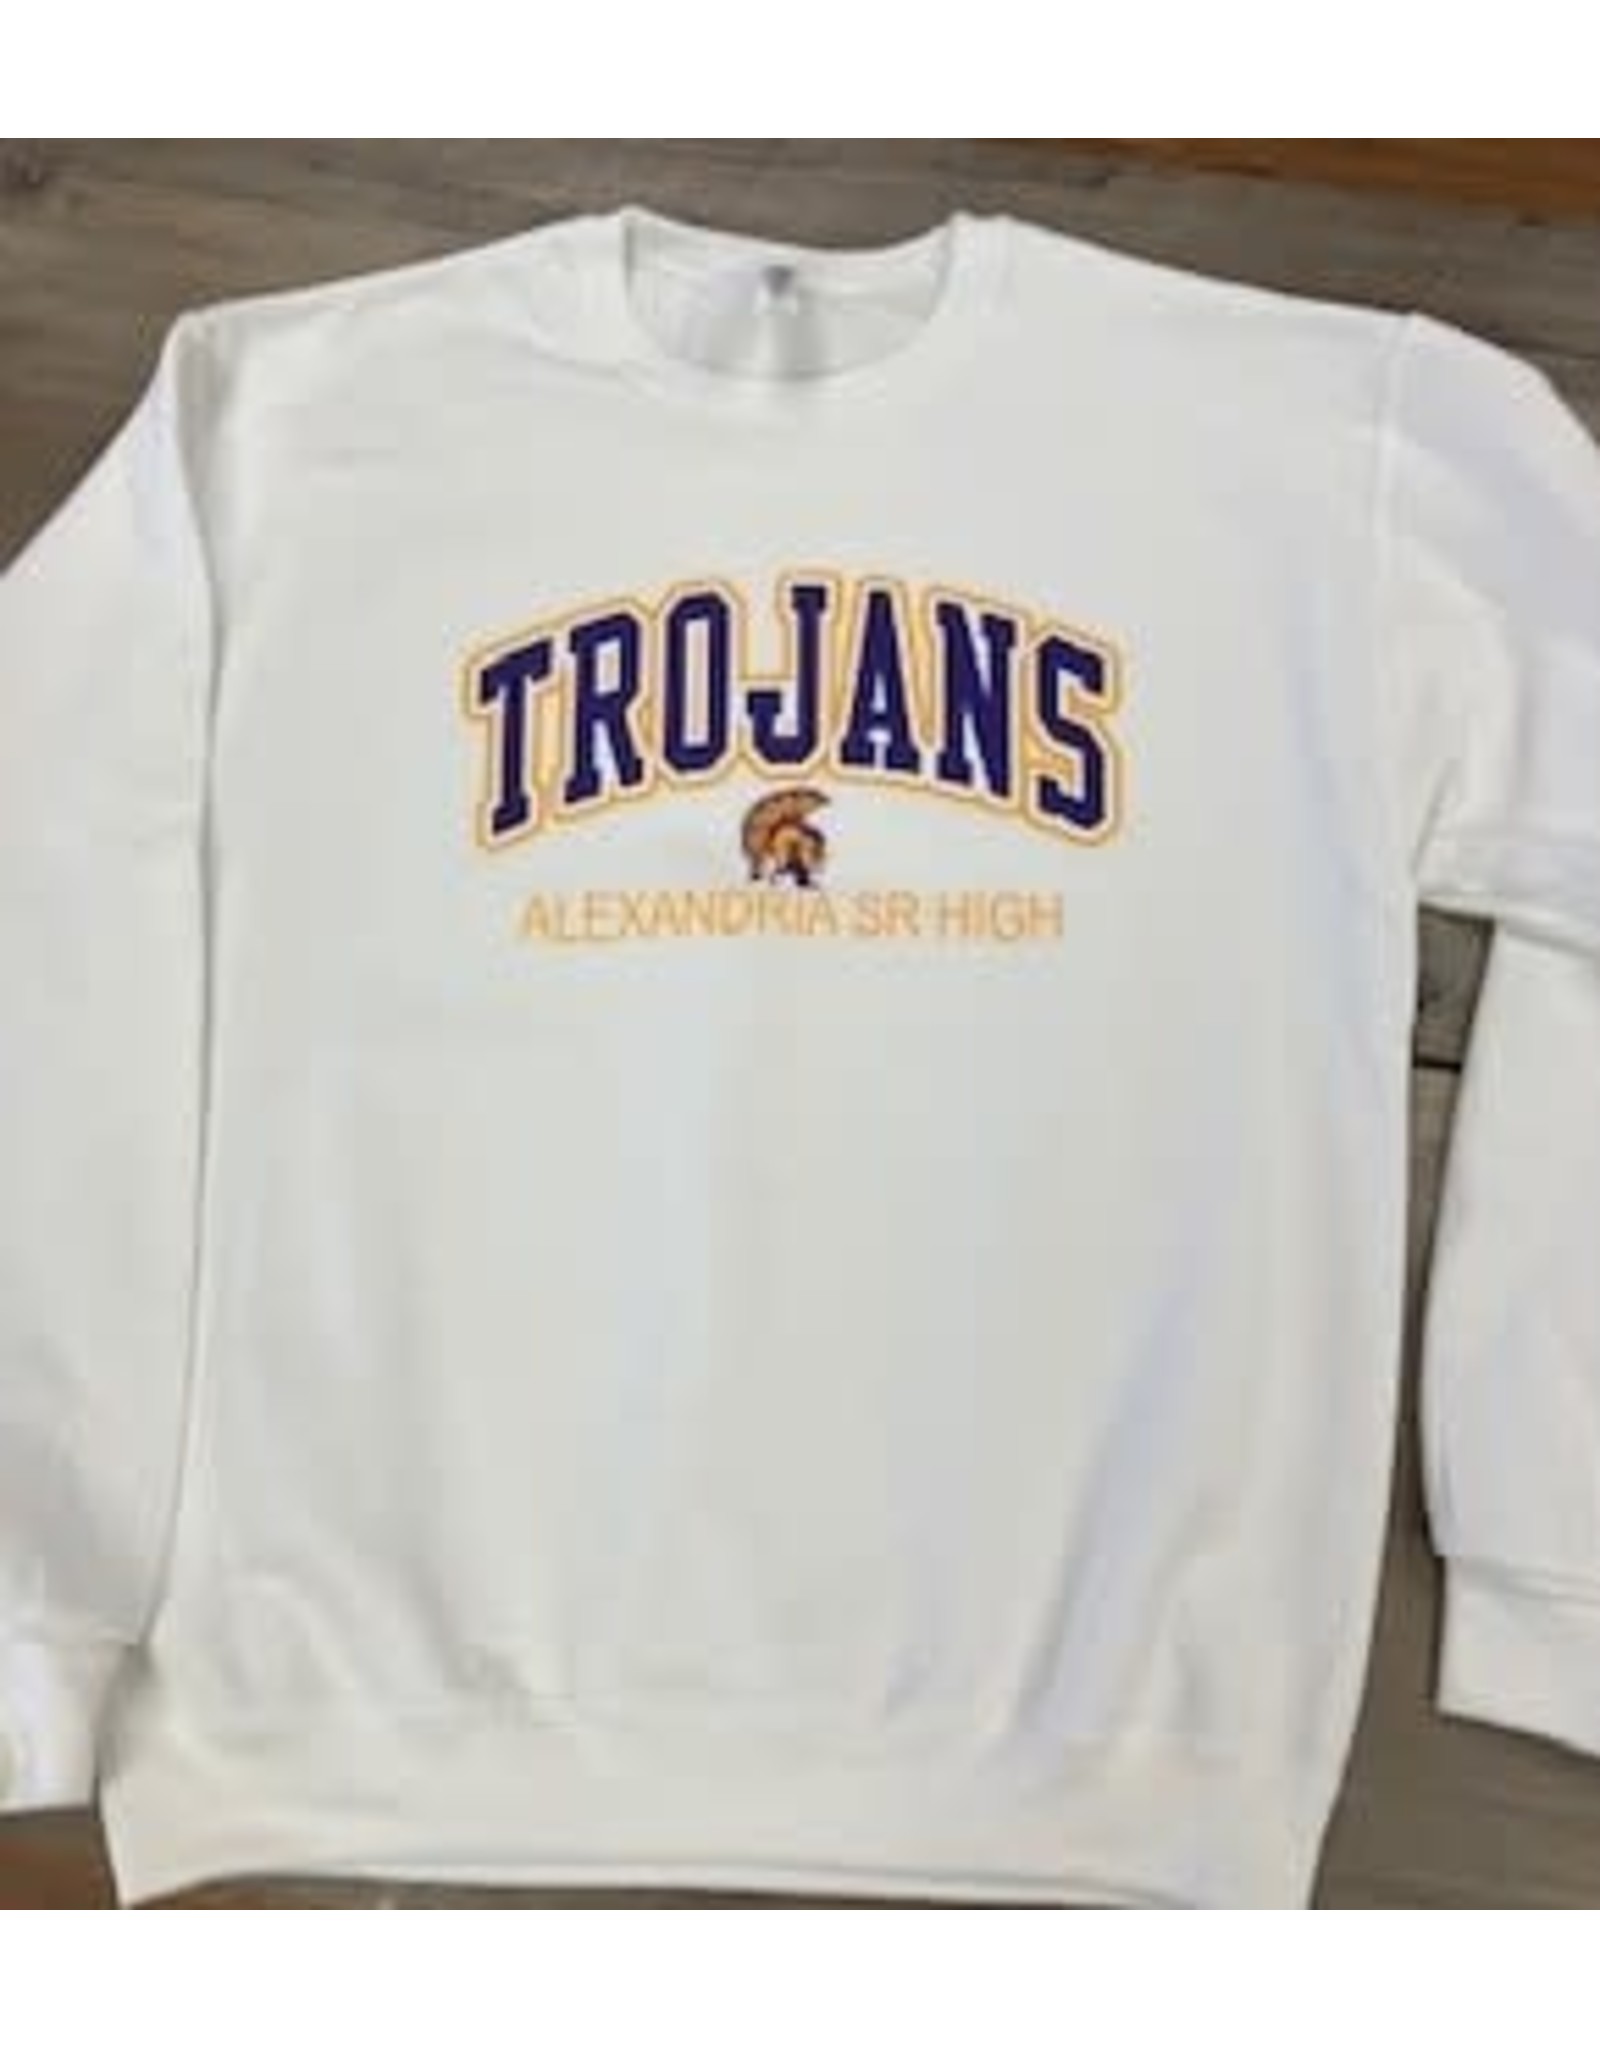 Jerzees Trojans sweatshirt/ White